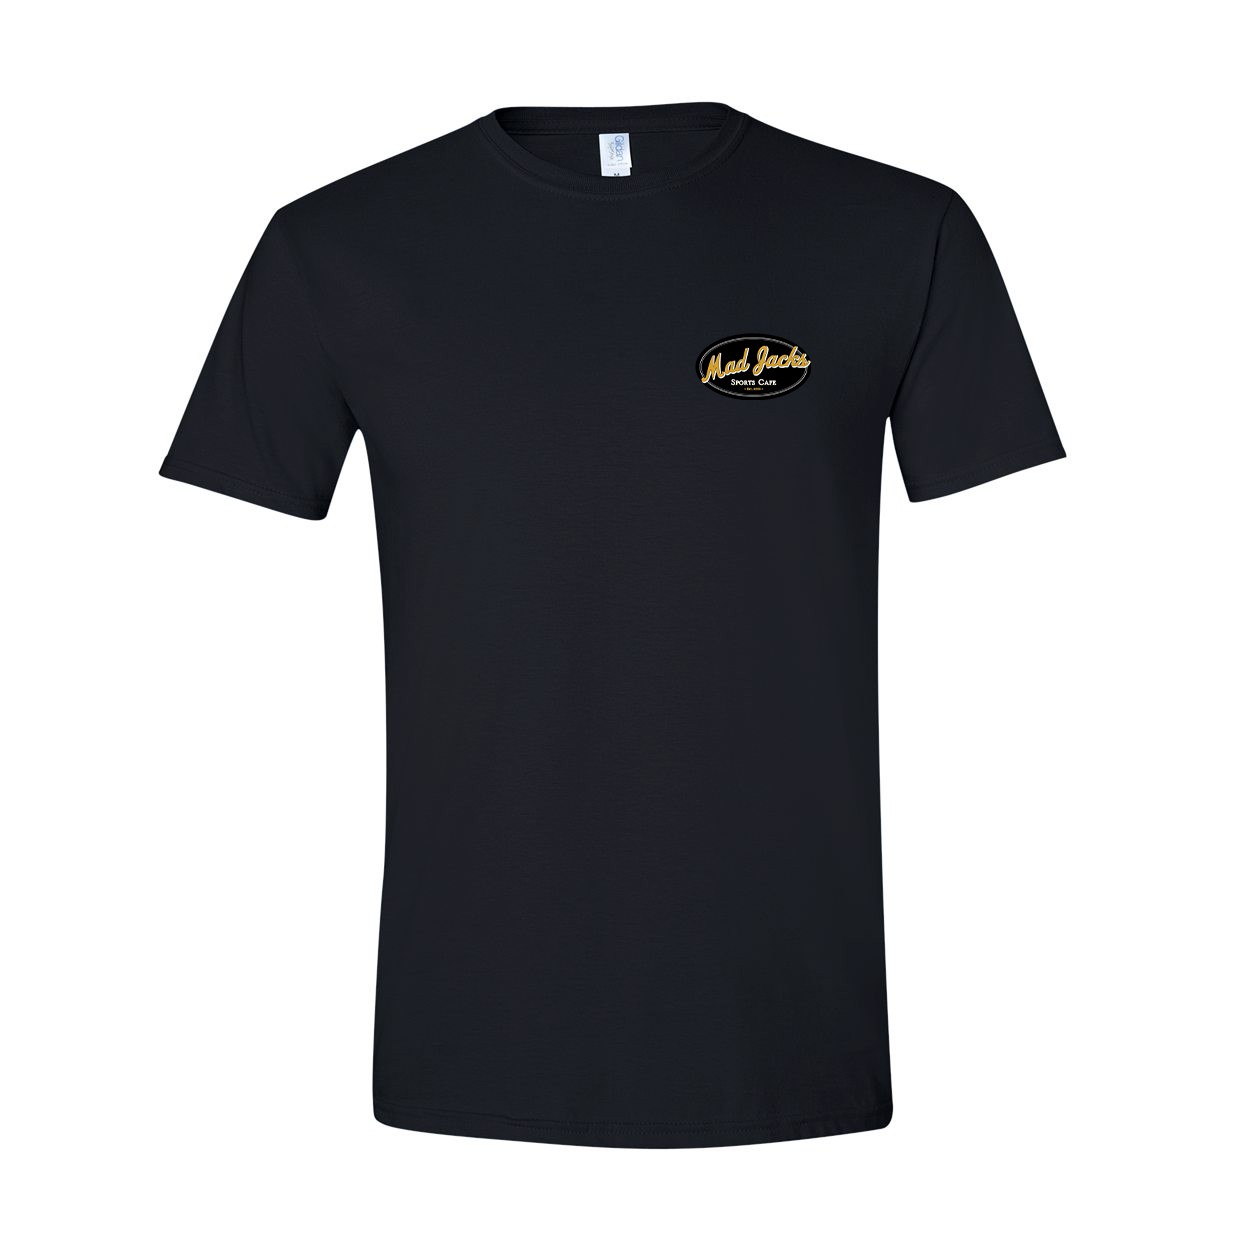 Mad Jacks Night Out T-Shirt Black (White Logo)